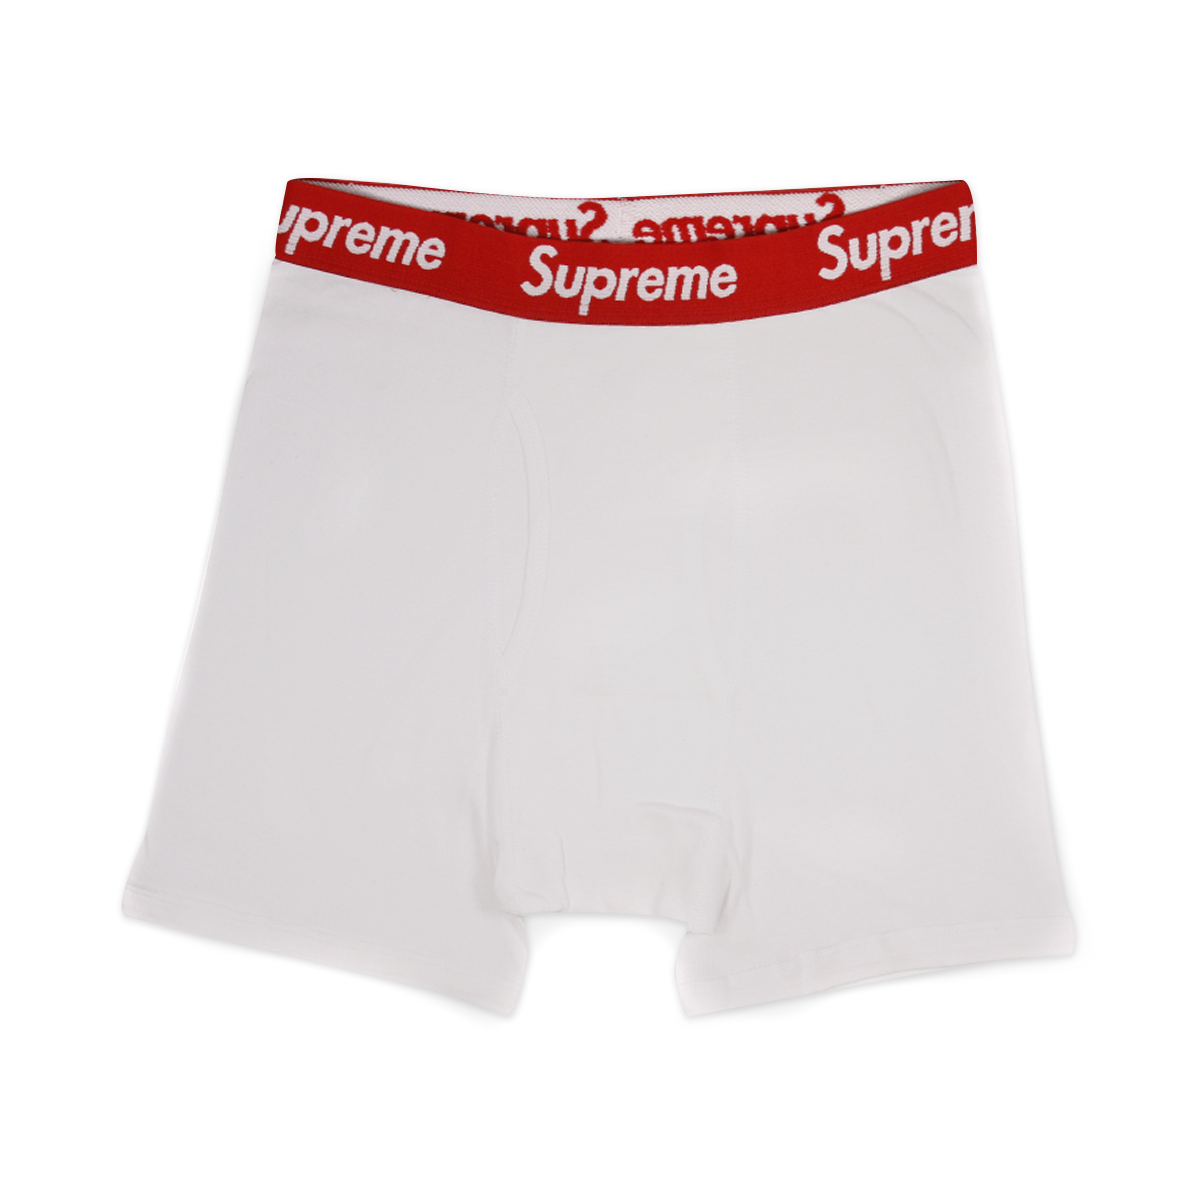 Supreme Men's 100% Authentic Single Pack White Boxer Briefs